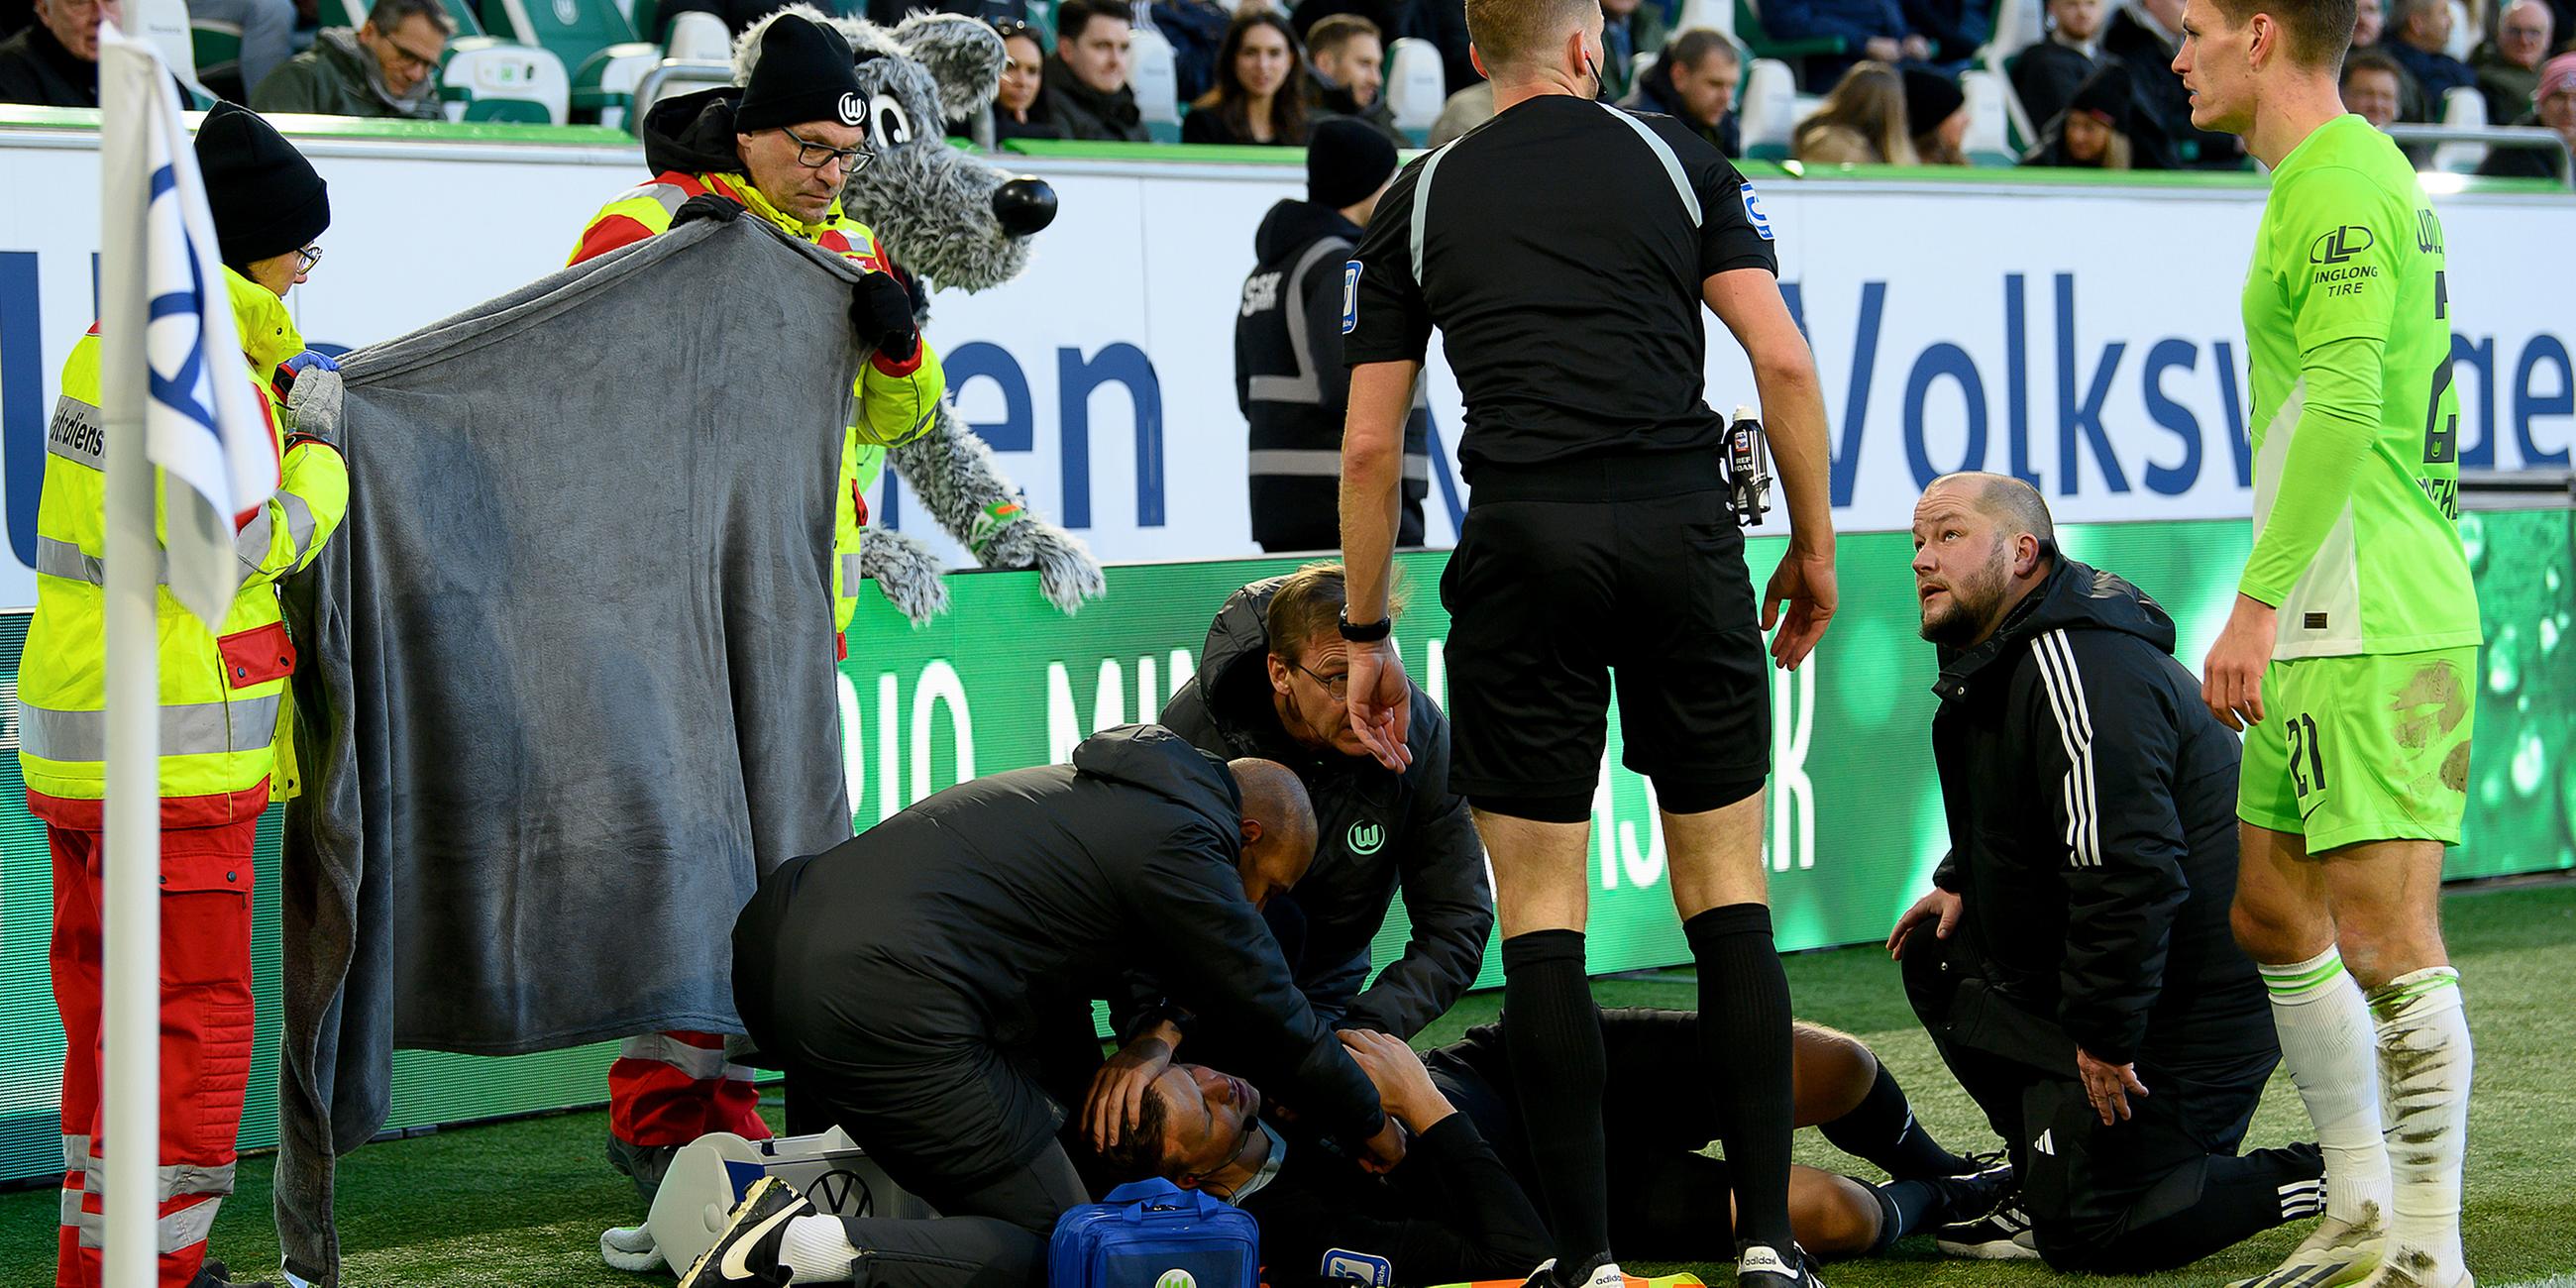 Schiedsrichter-Assistent Thorben Siewer liegt verletzt am Boden.